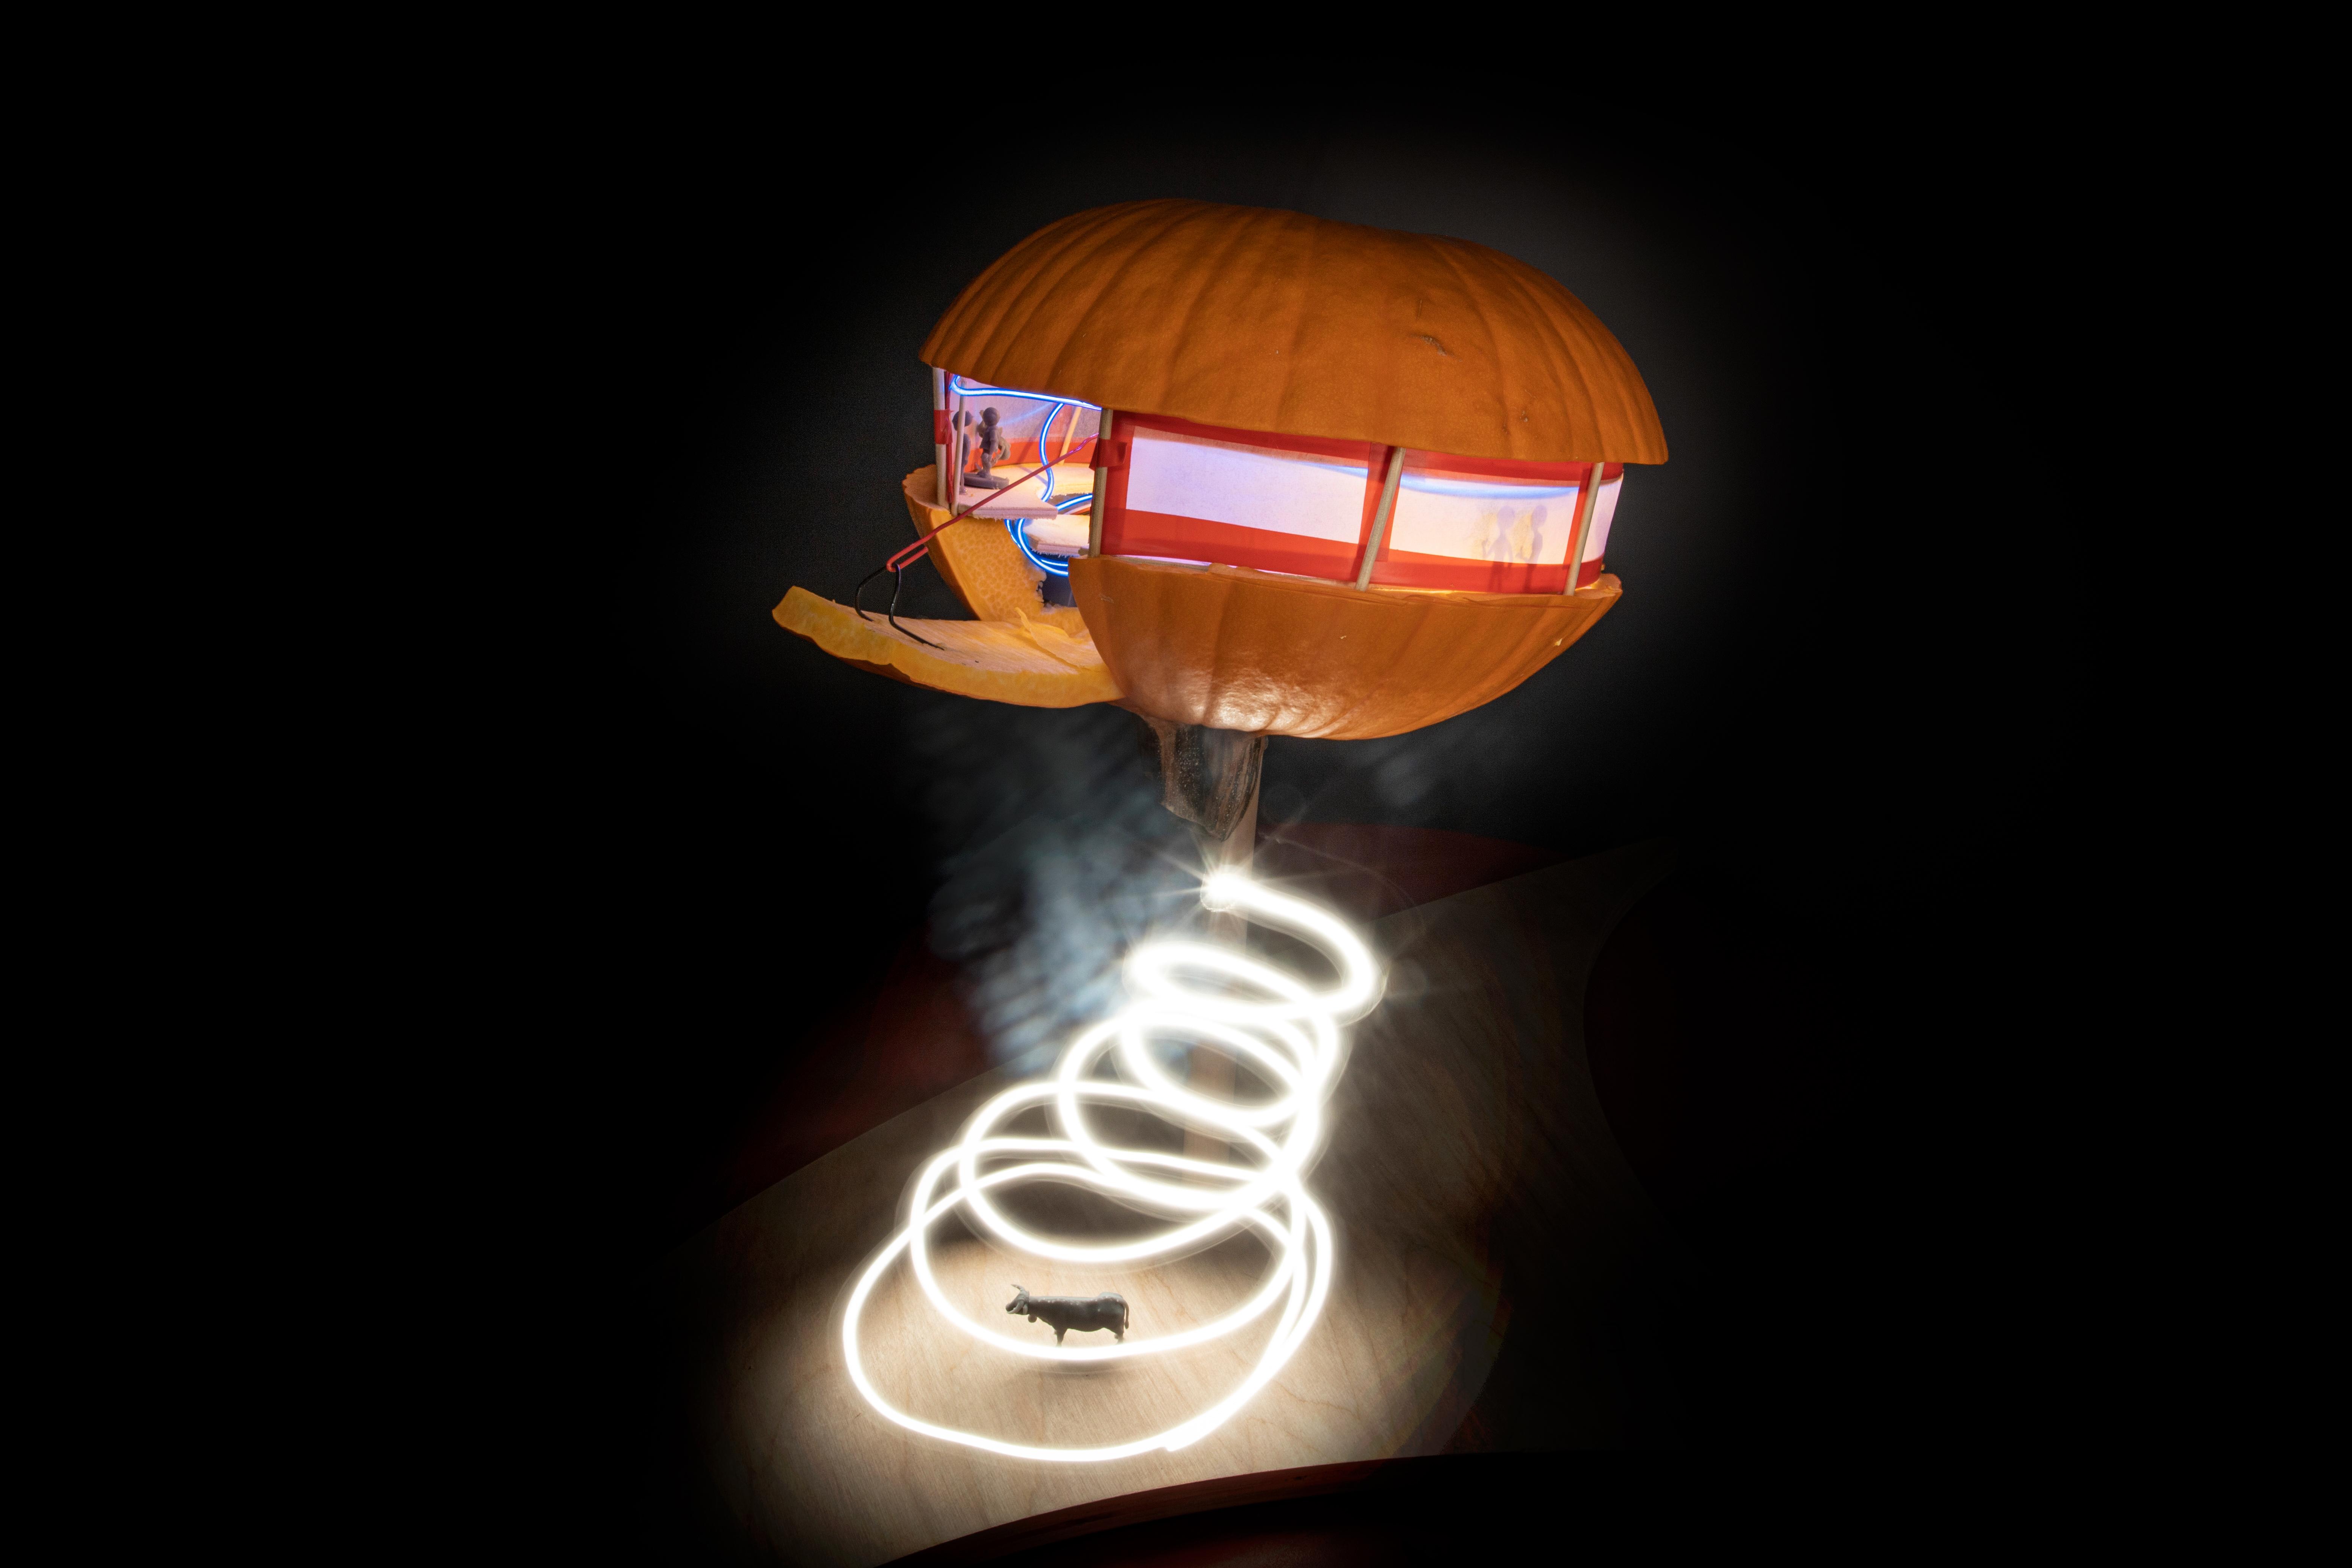 artwork showing a pumpkin-themed spaceship